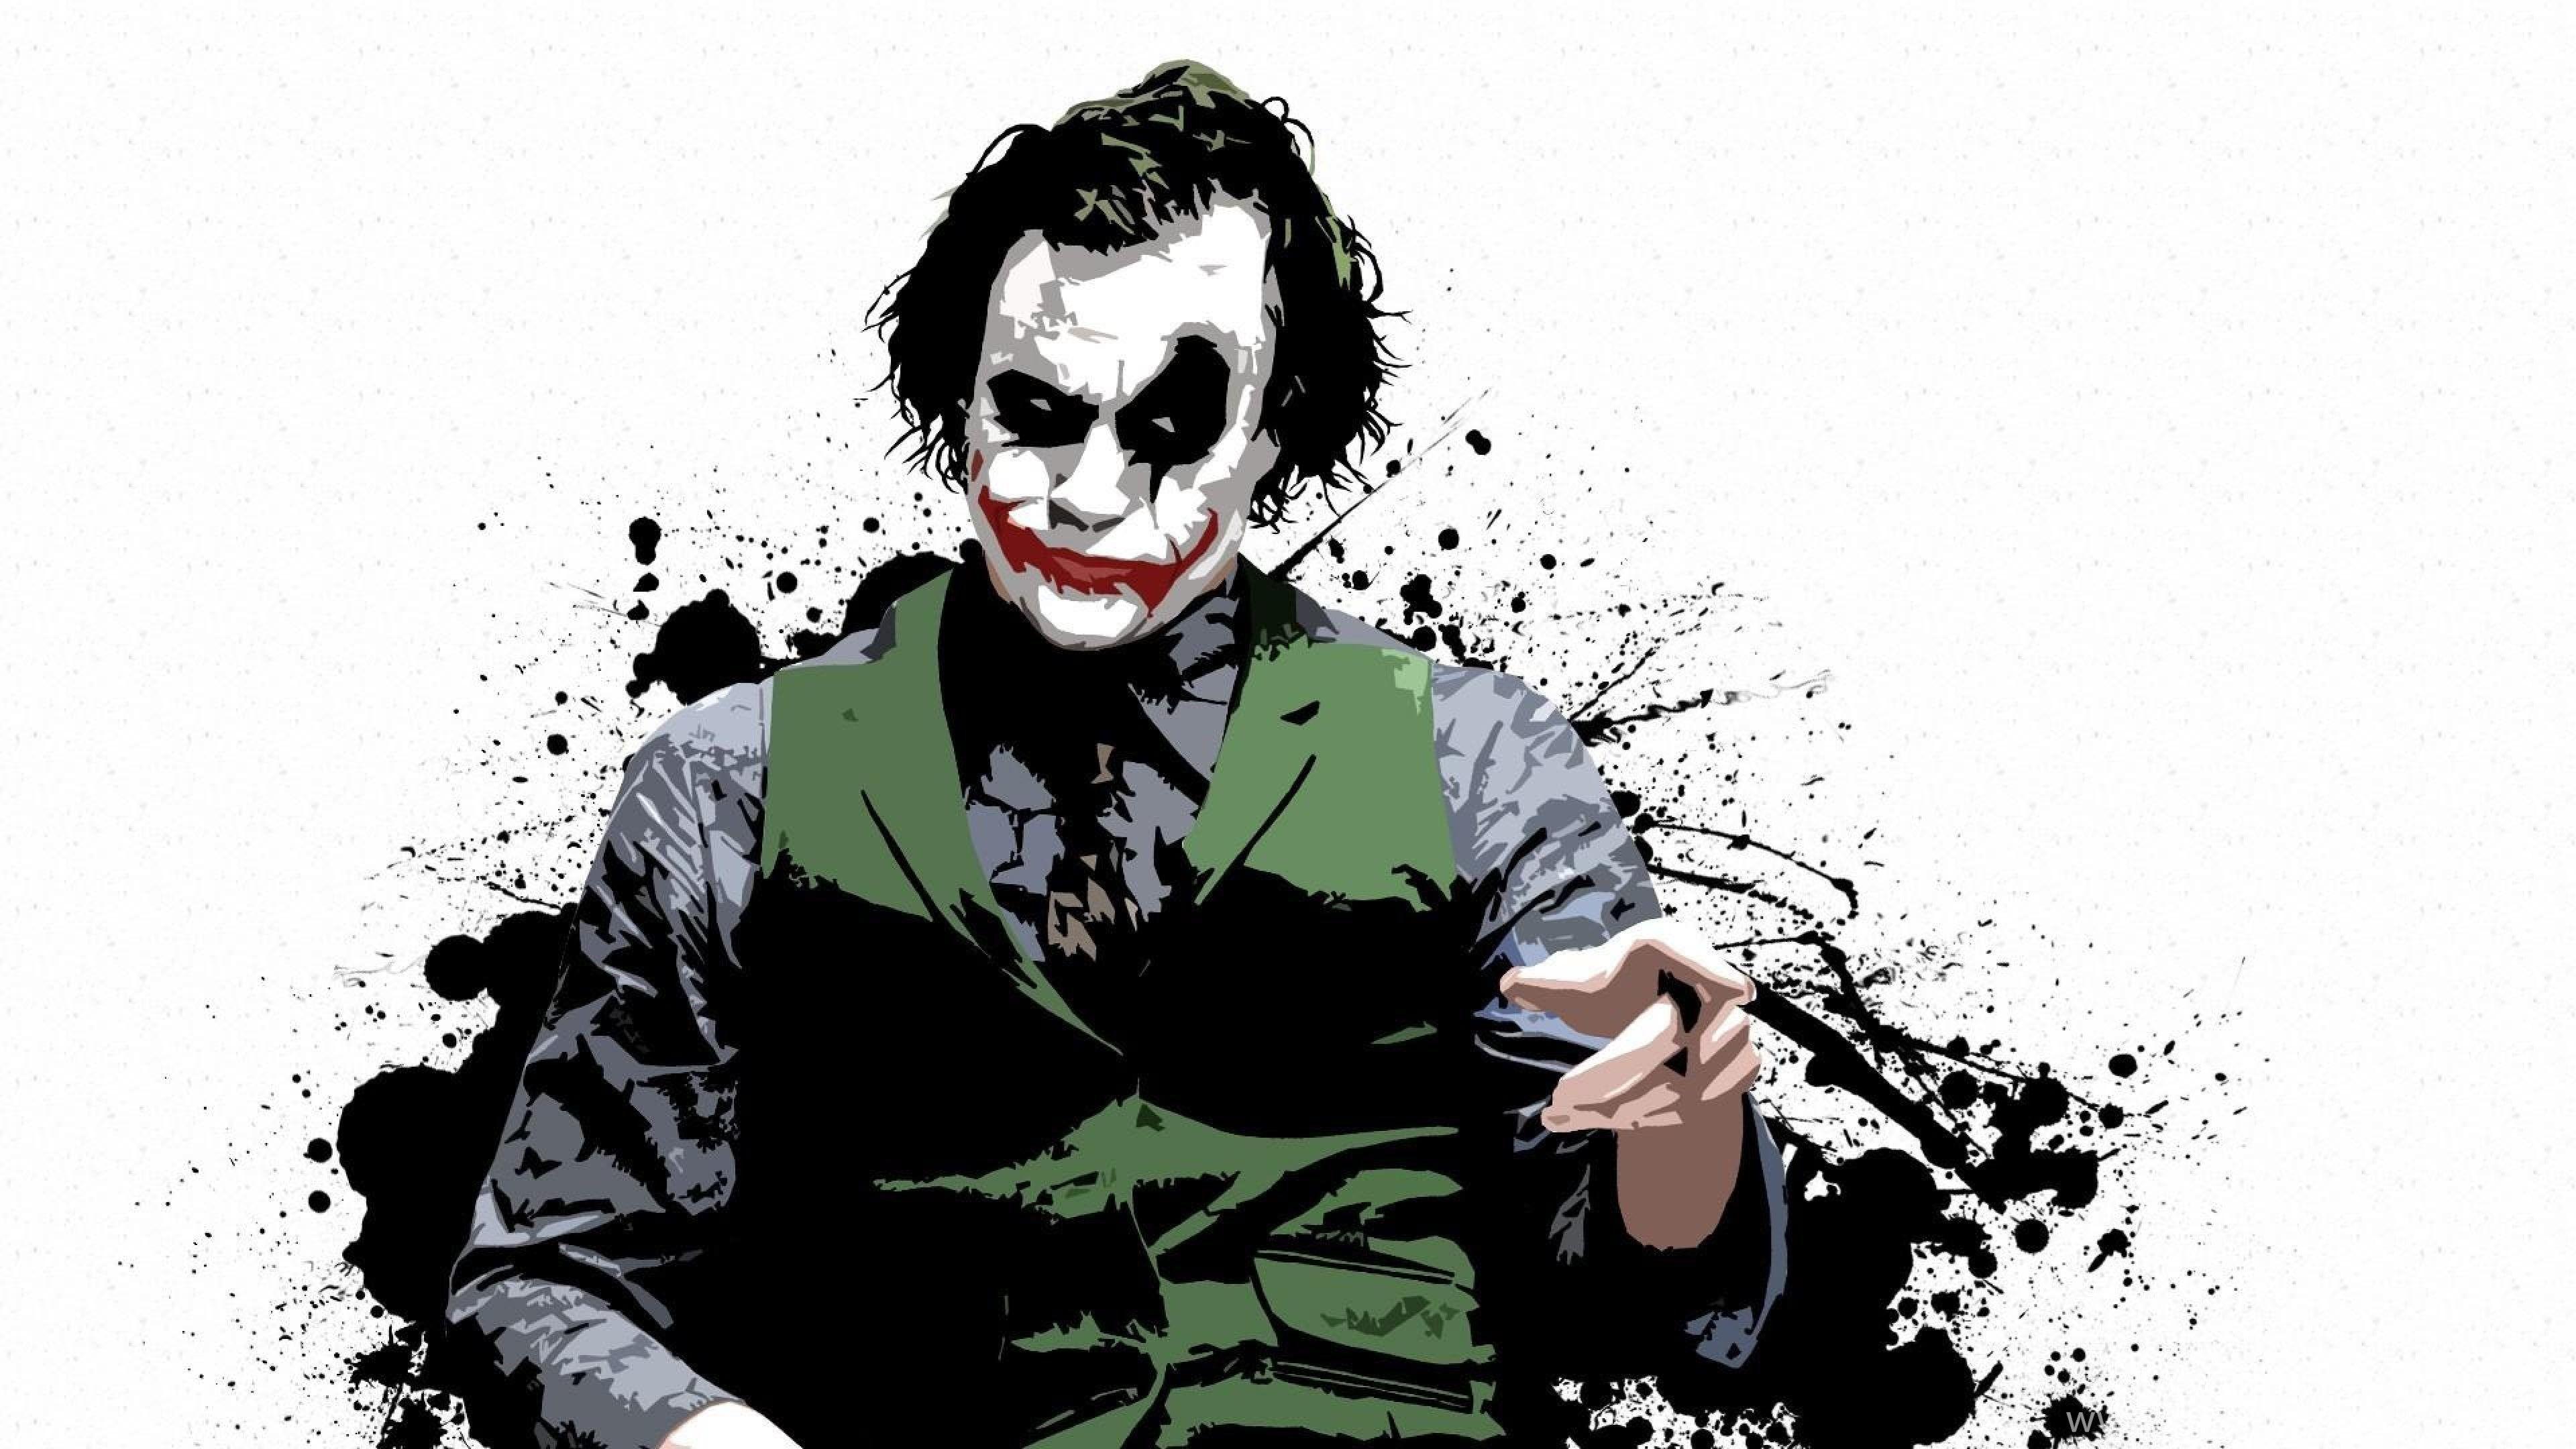 Dark Knight Joker In 4k Ultra Hd Wallpapers Top Free Dark Knight Joker In 4k Ultra Hd Backgrounds Wallpaperaccess